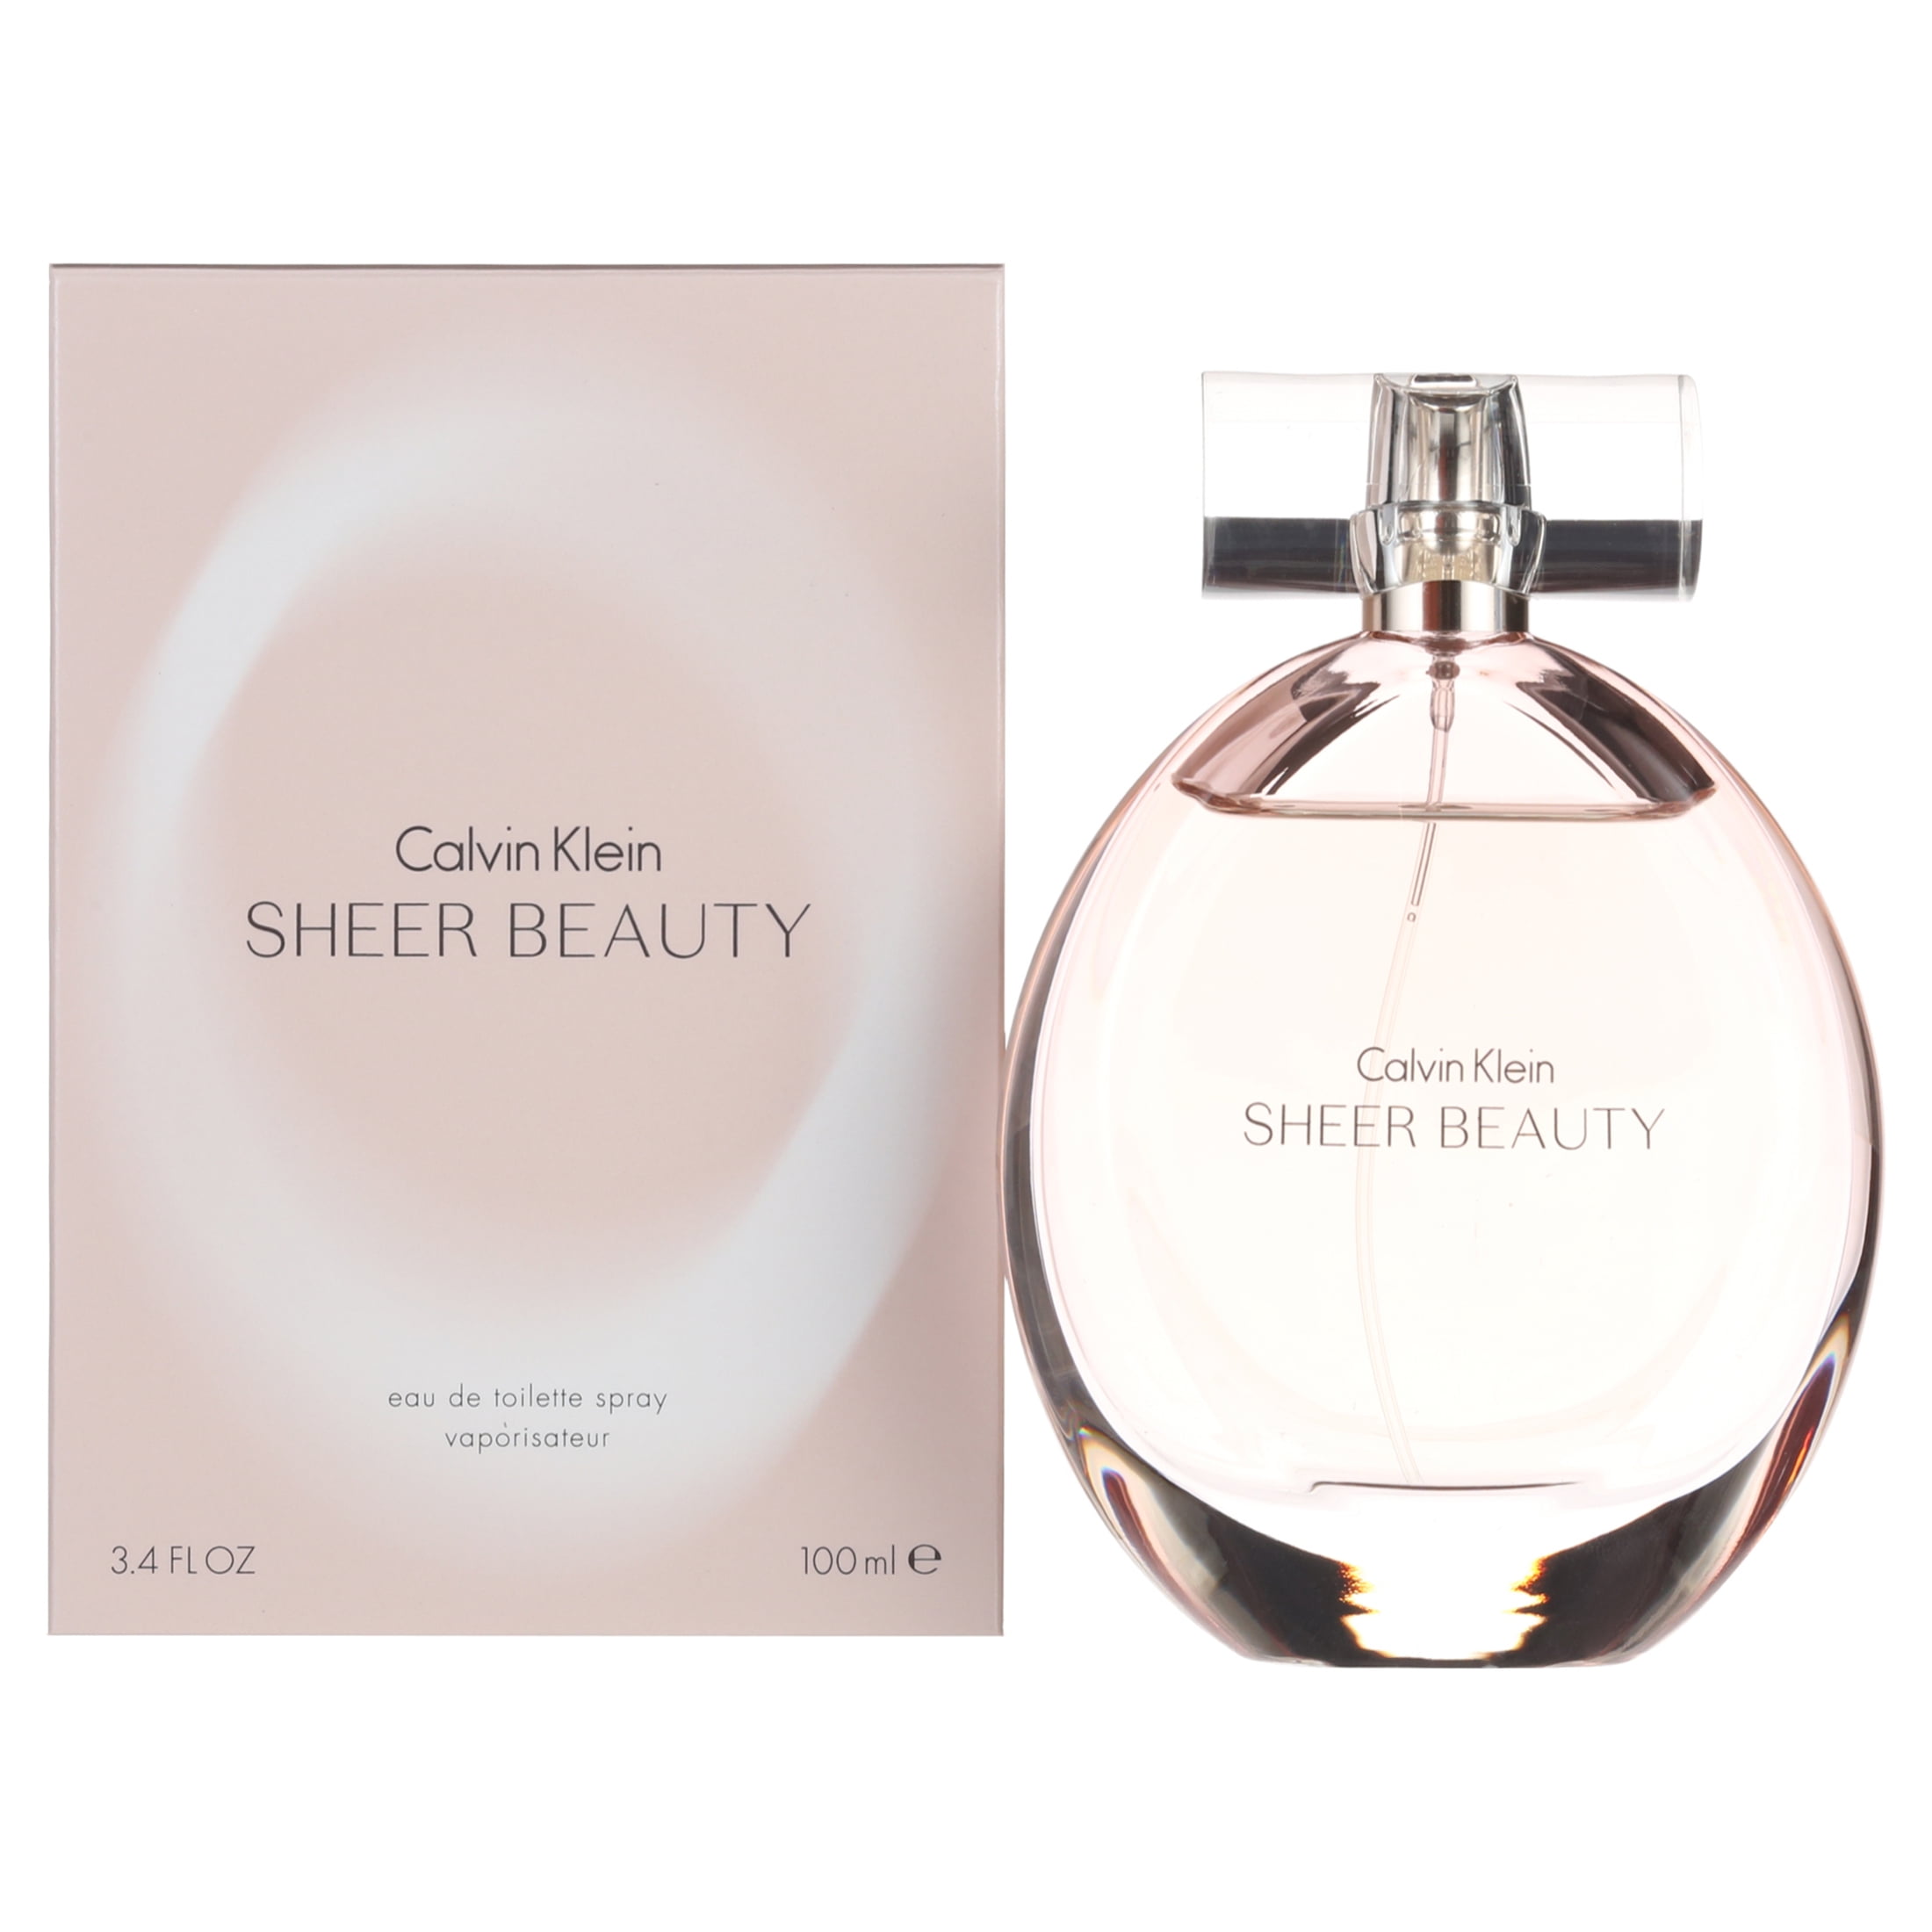 Calvin klein sheer beauty perfume